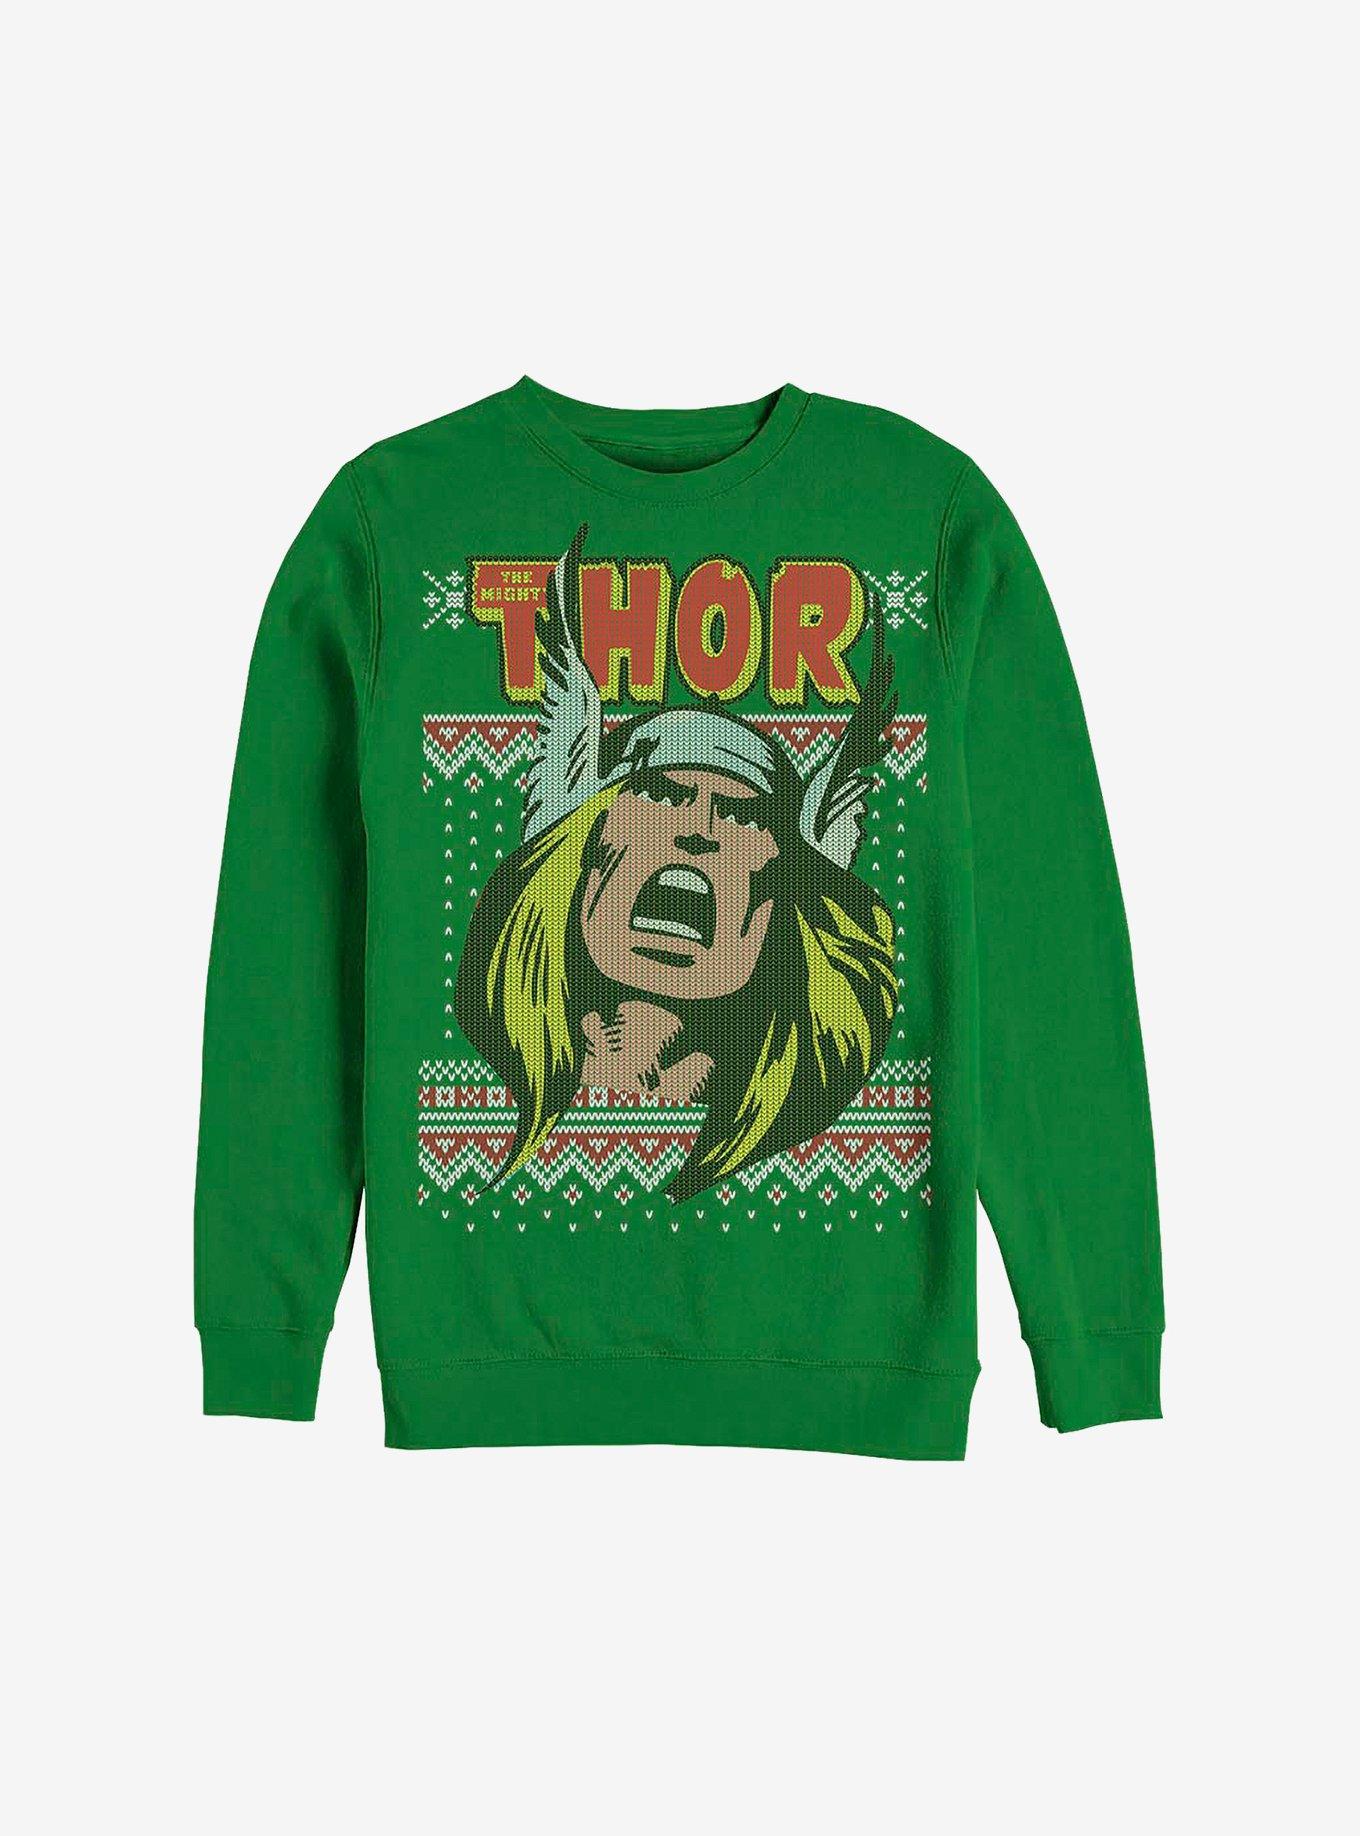 Marvel Thor Presents Holiday Sweatshirt, KELLY, hi-res